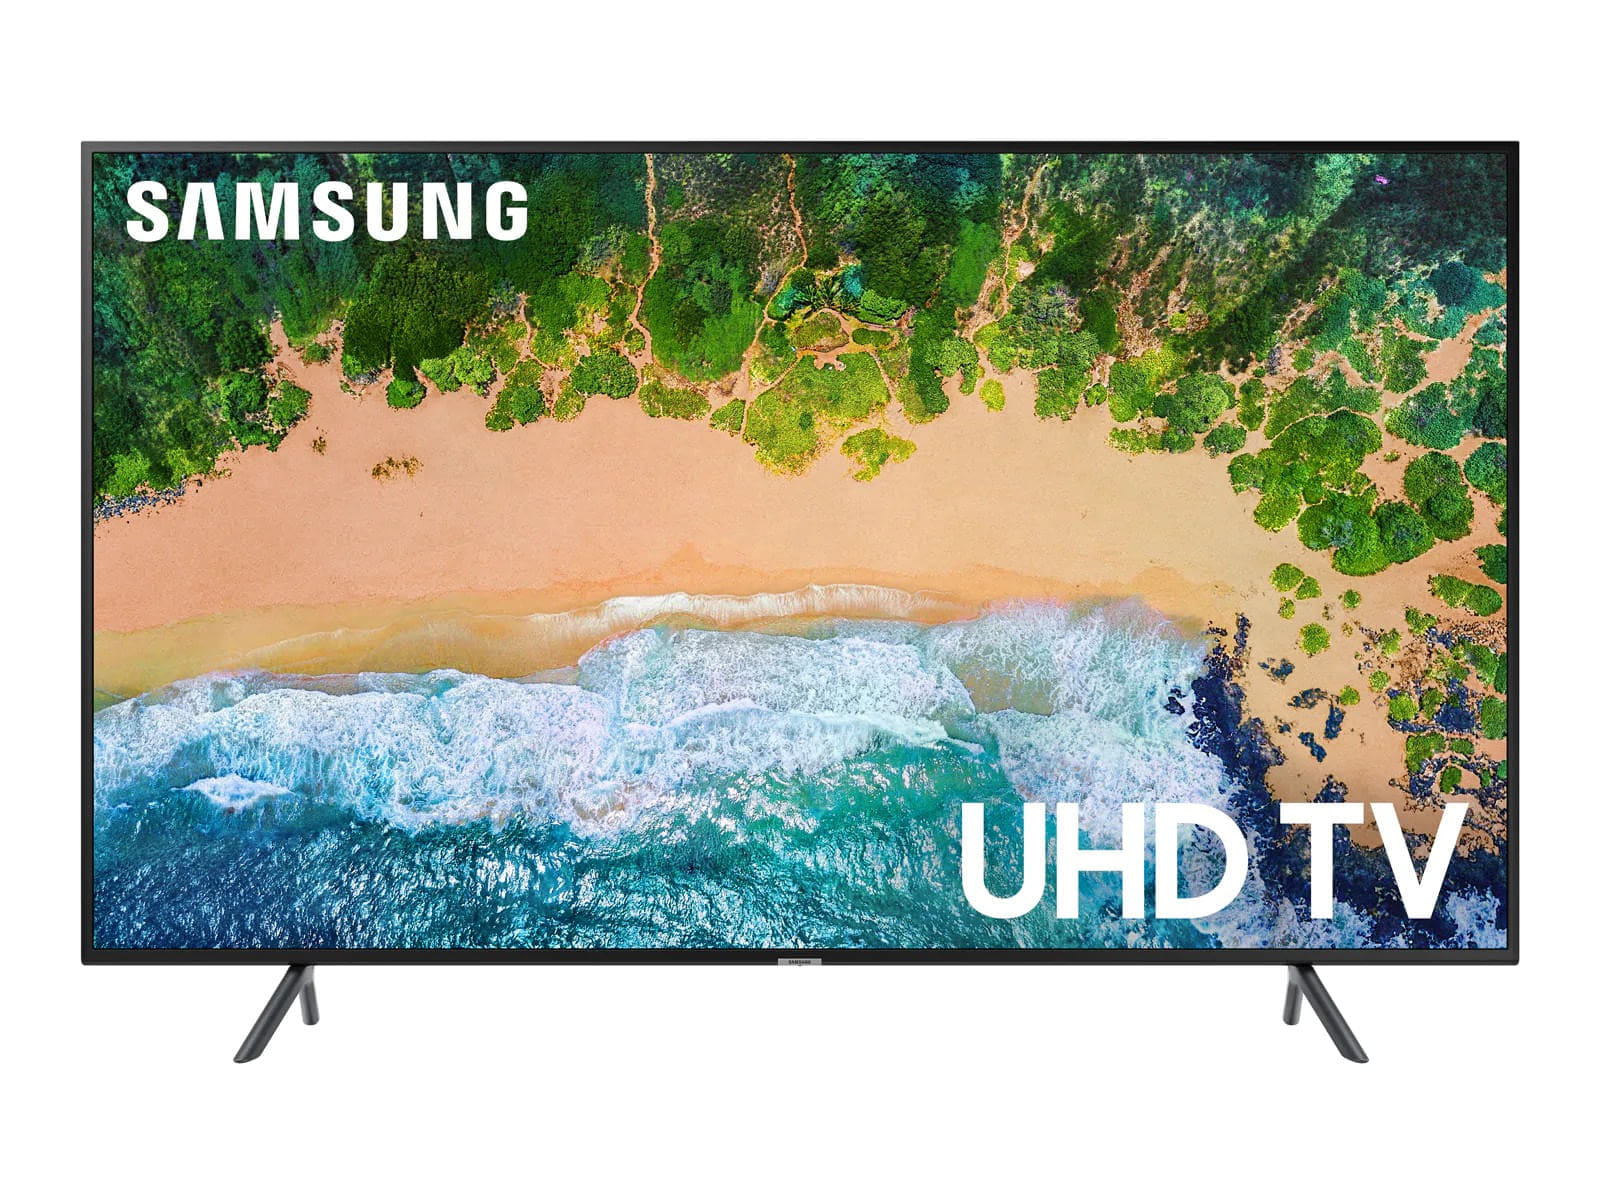 Samsung 75 In 2160p LED Smart TV $747.99